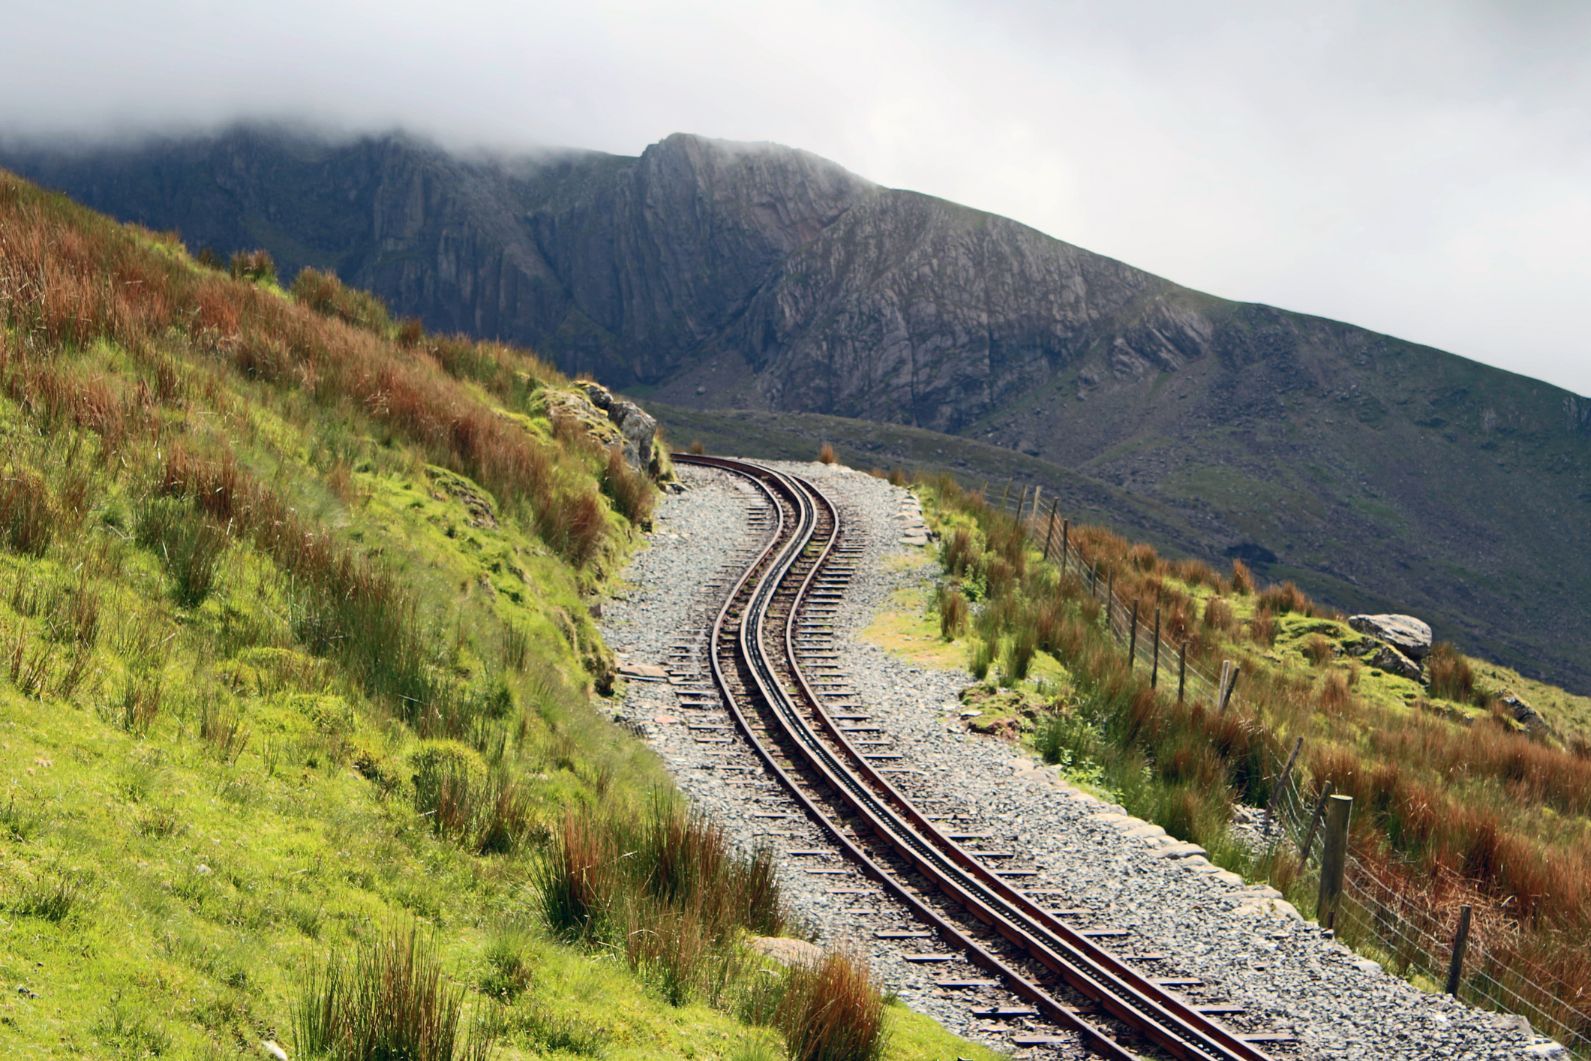 The railway line on Mount Snowdon